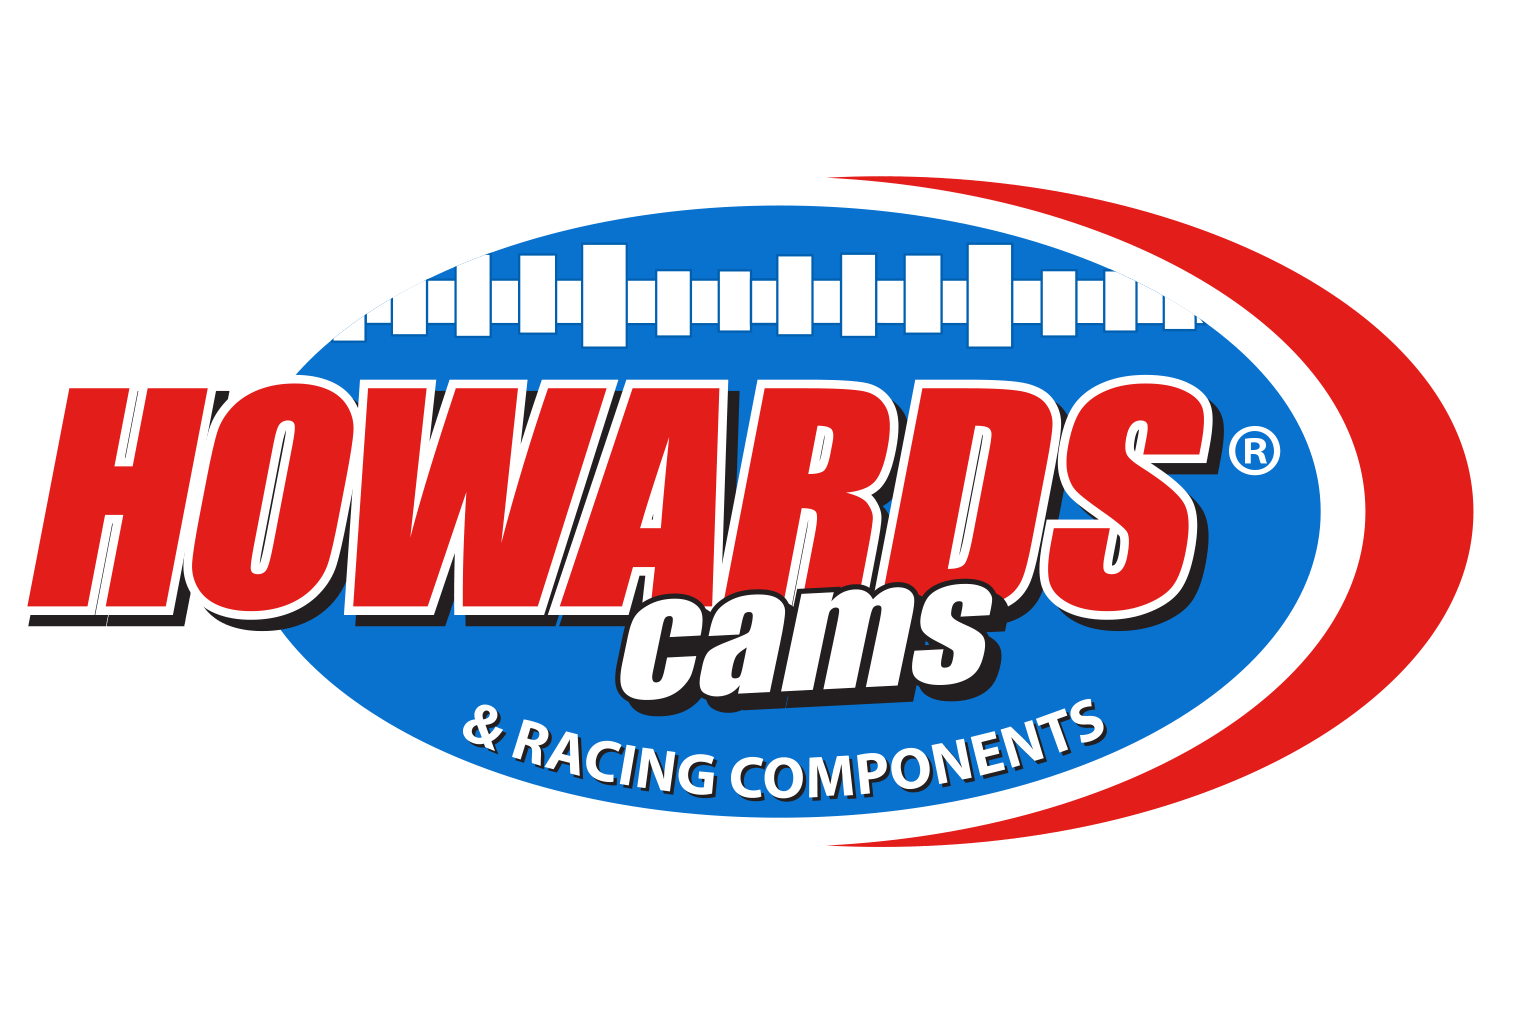 Howards Cams Inc